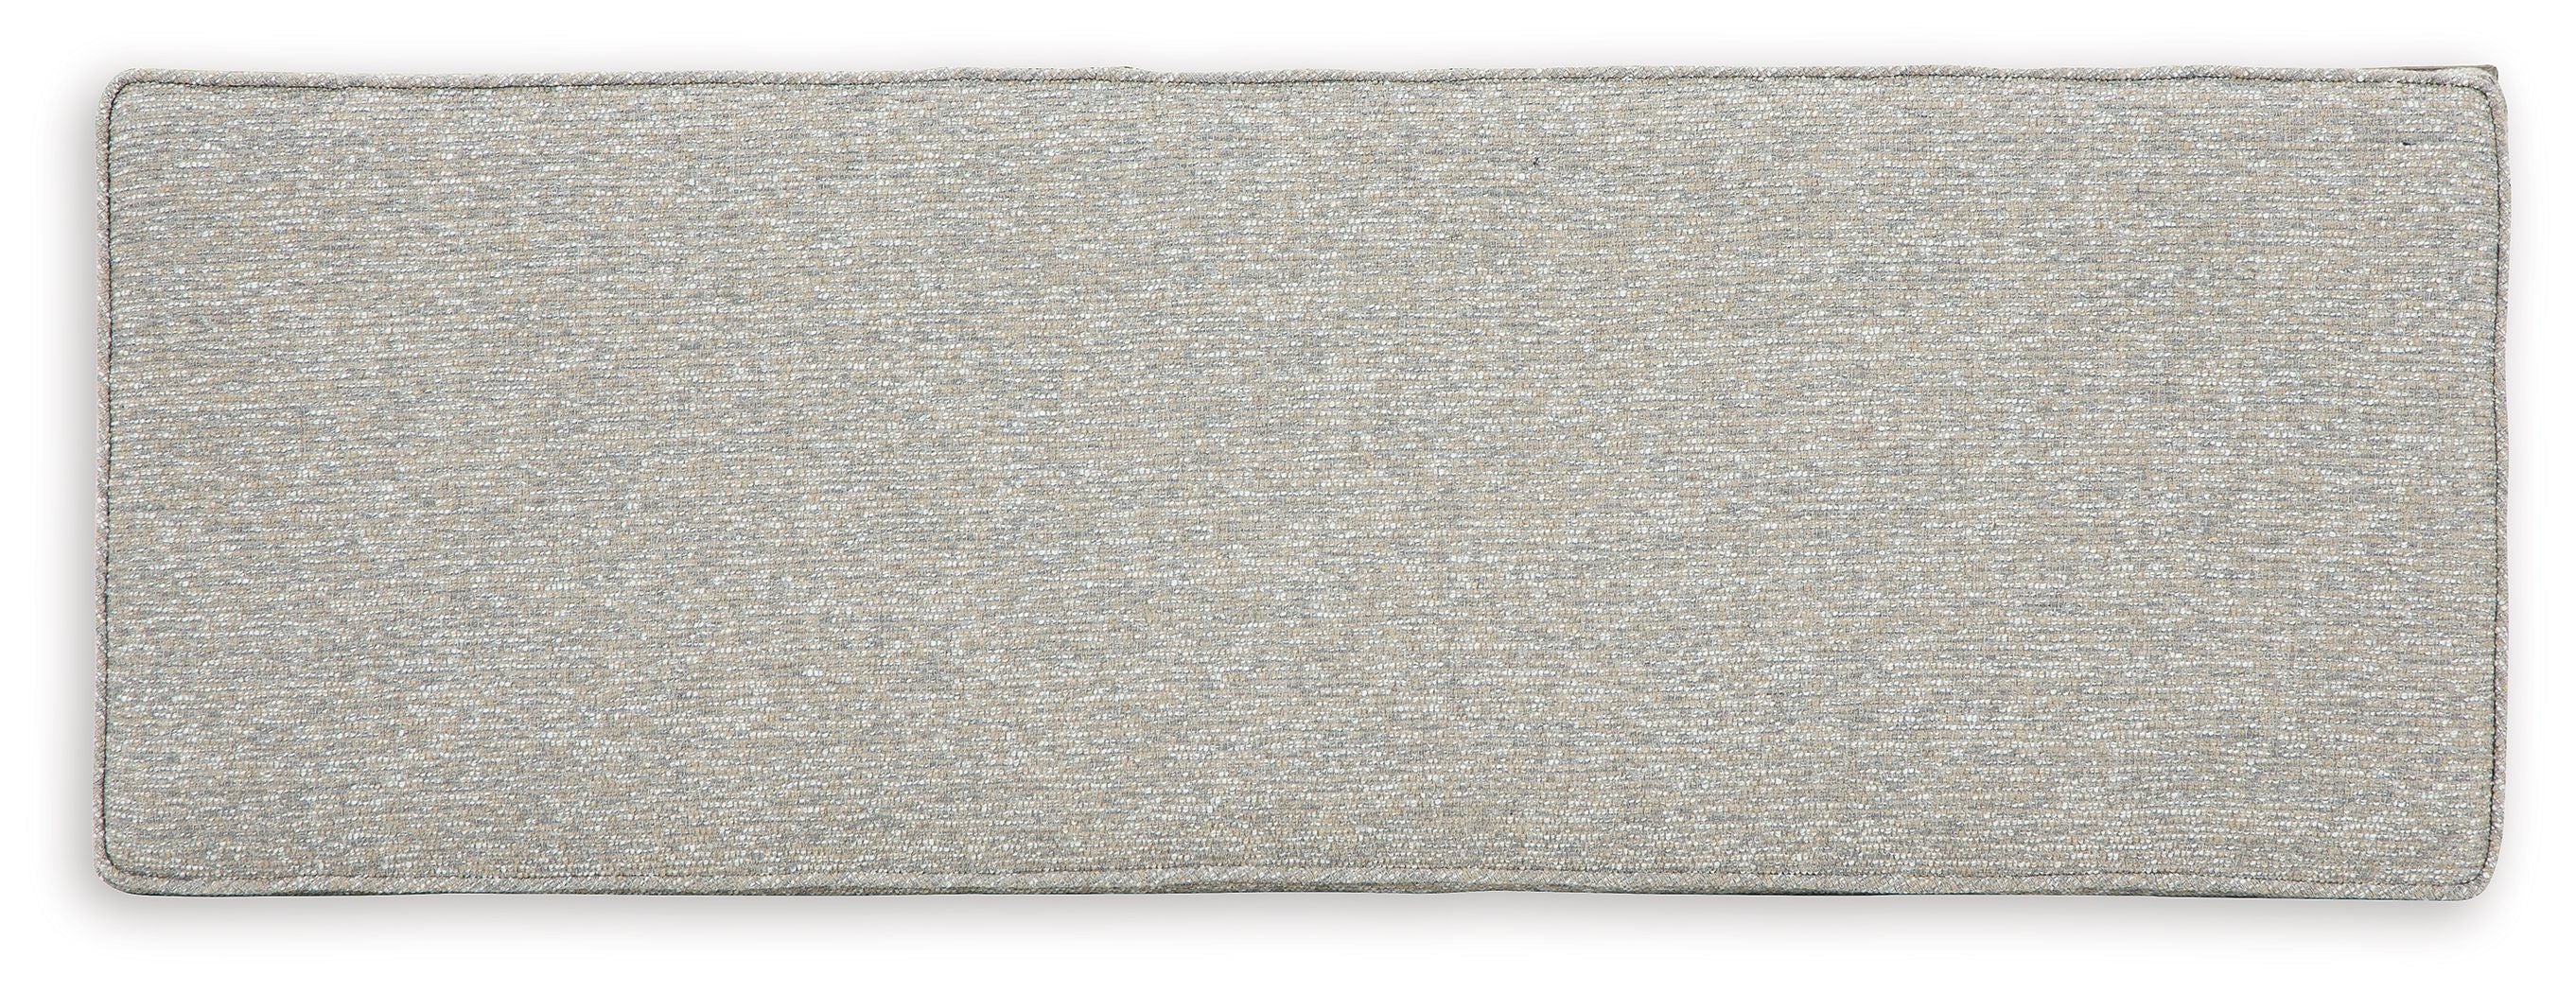 Hillside Barn - Gray / Brown - Bench With Cushion